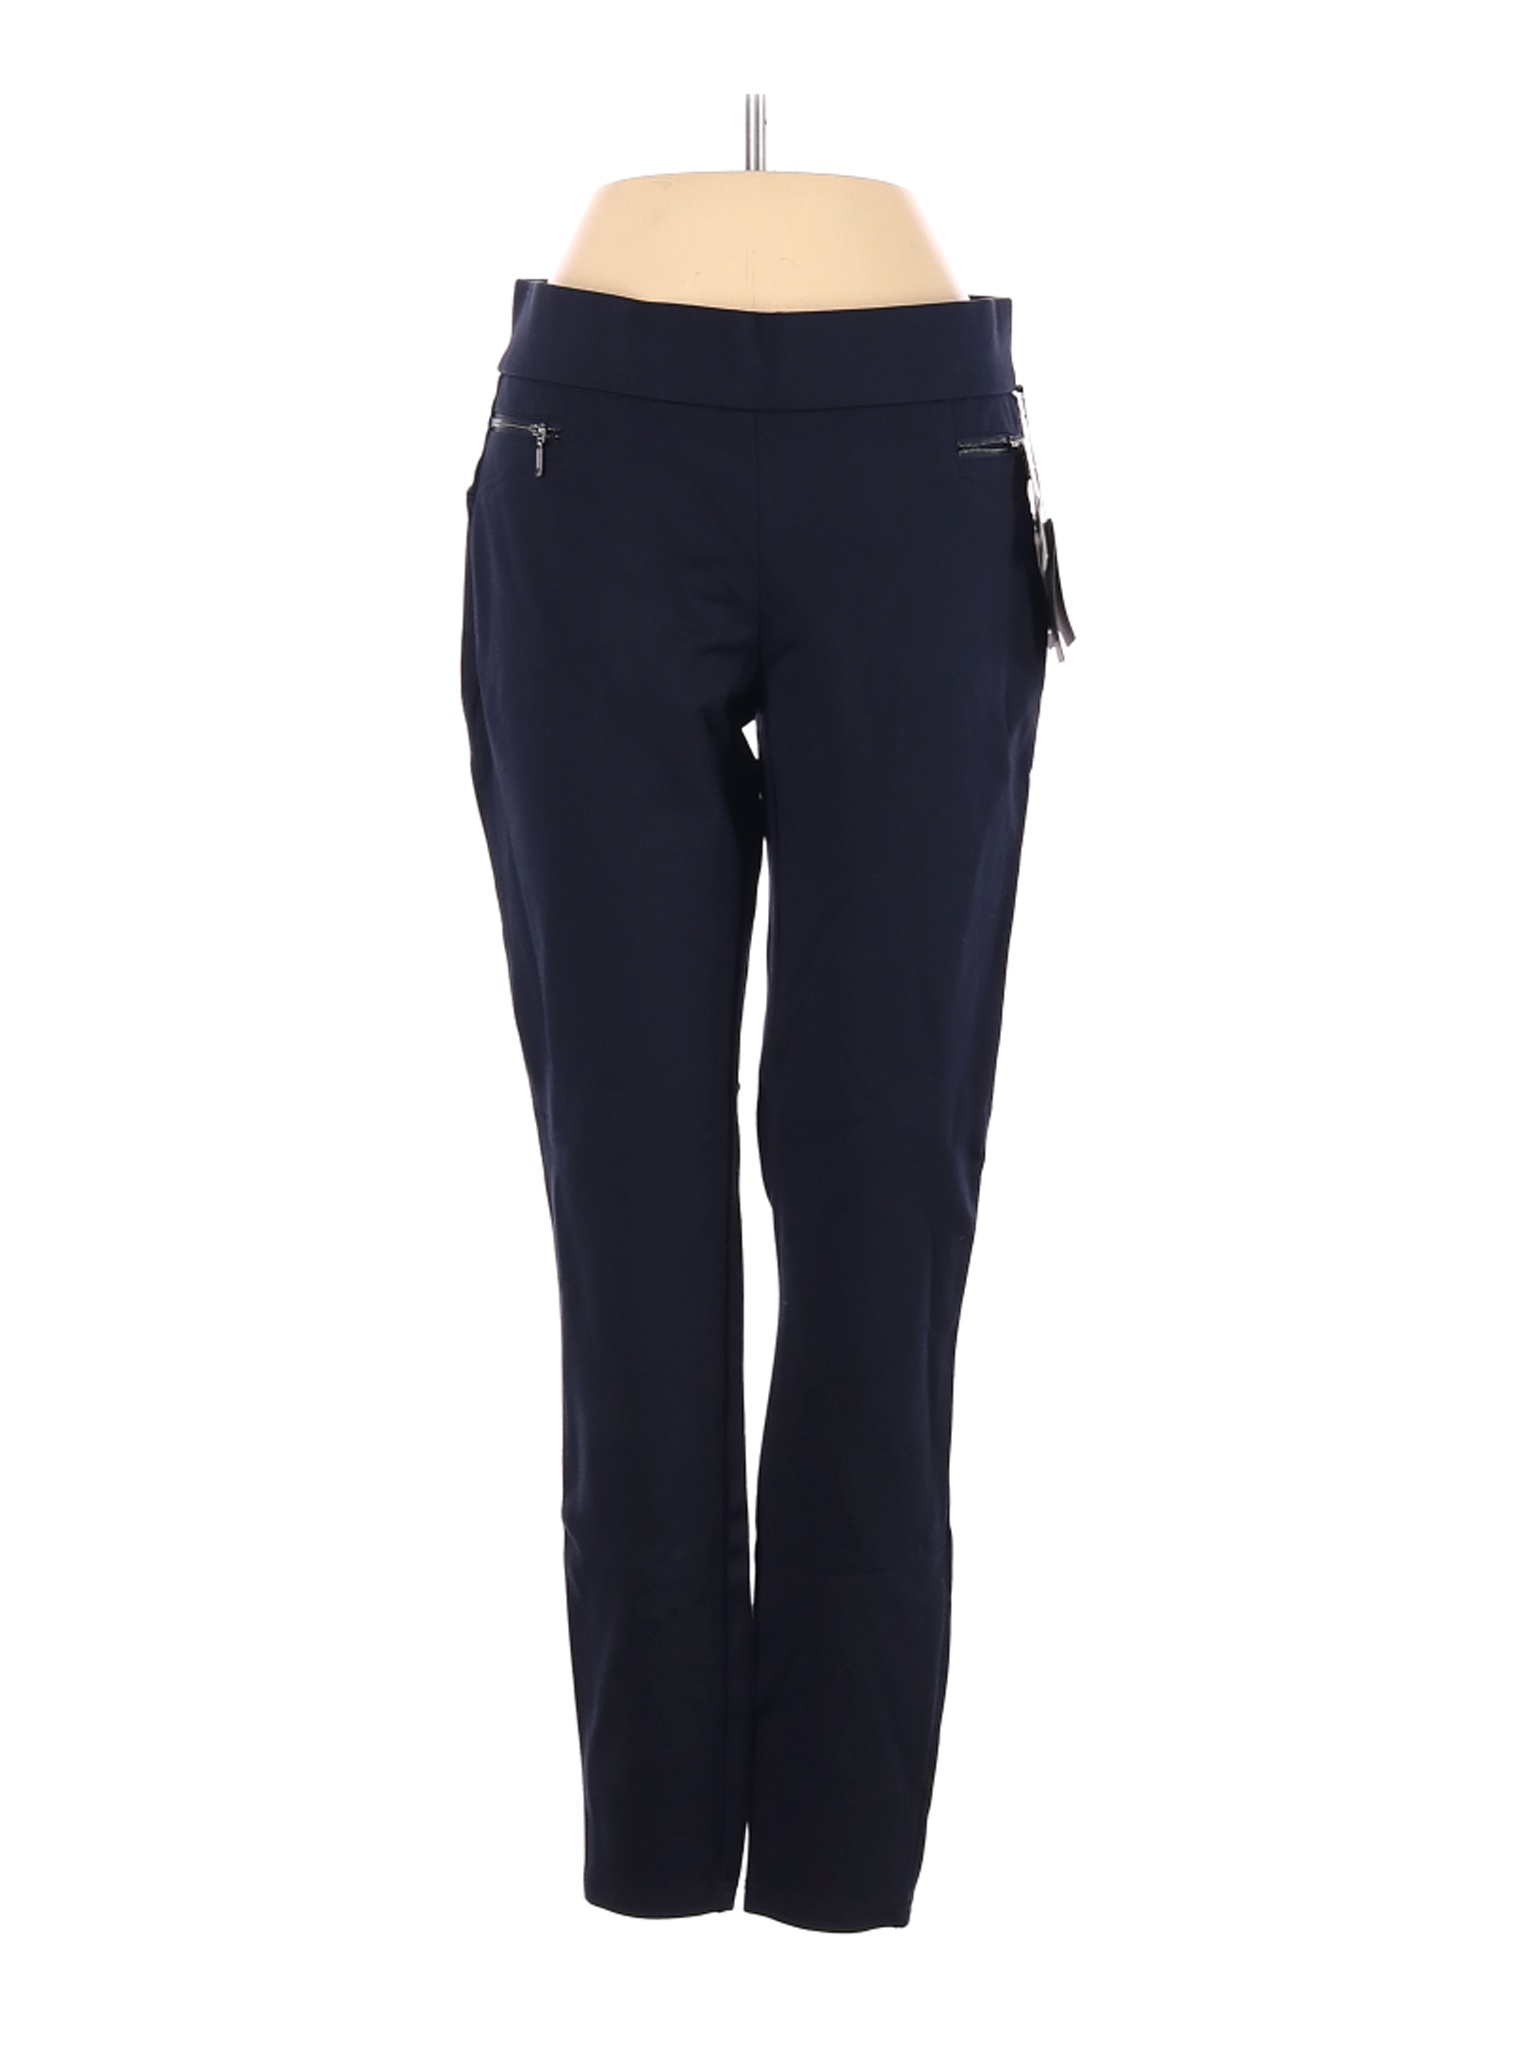 NWT Dalia Women Blue Casual Pants 4 | eBay